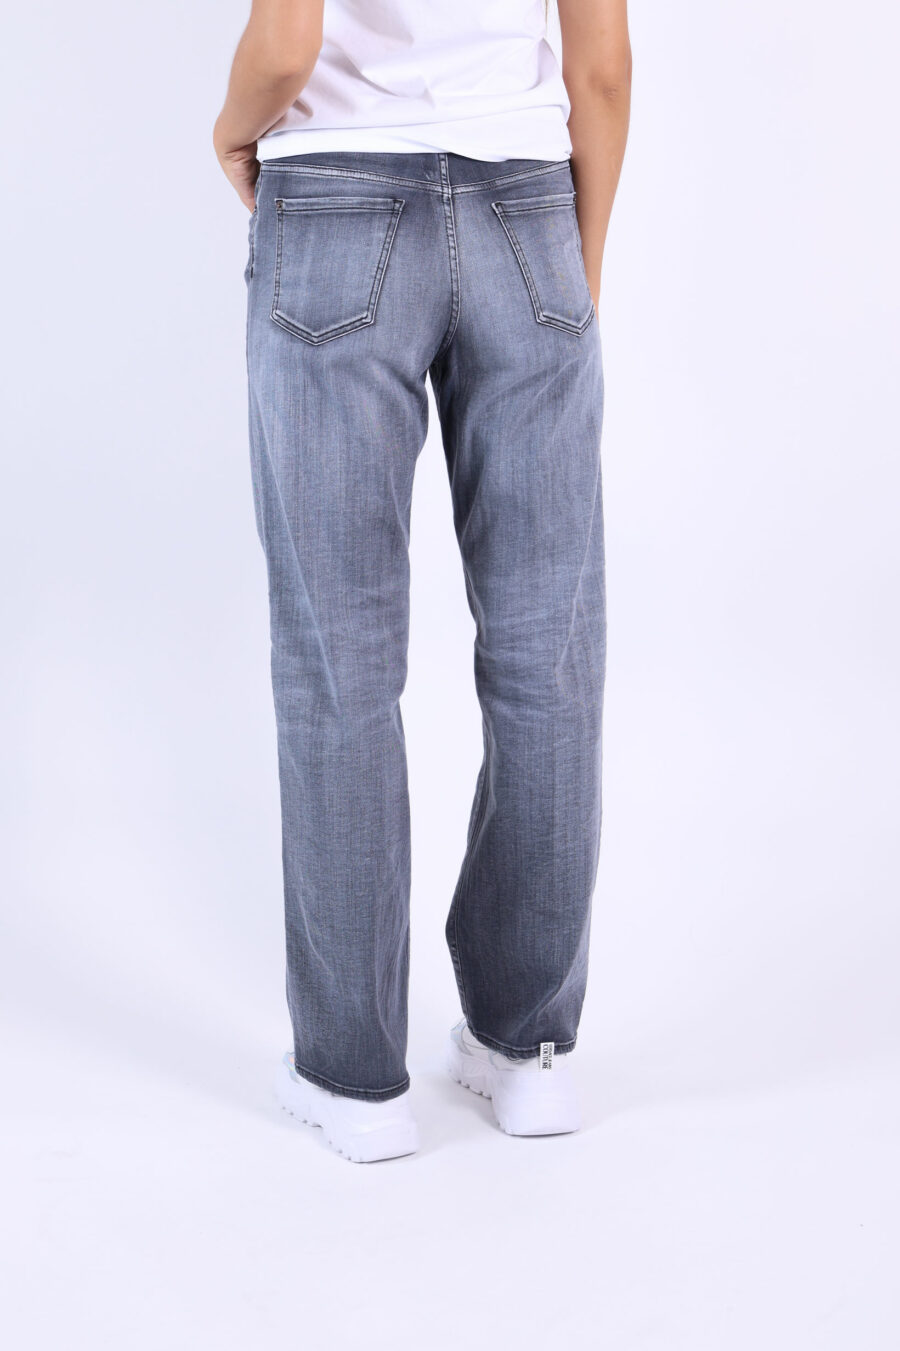 Jeans "San Diego jean" noir usé - 361223054662201939 1